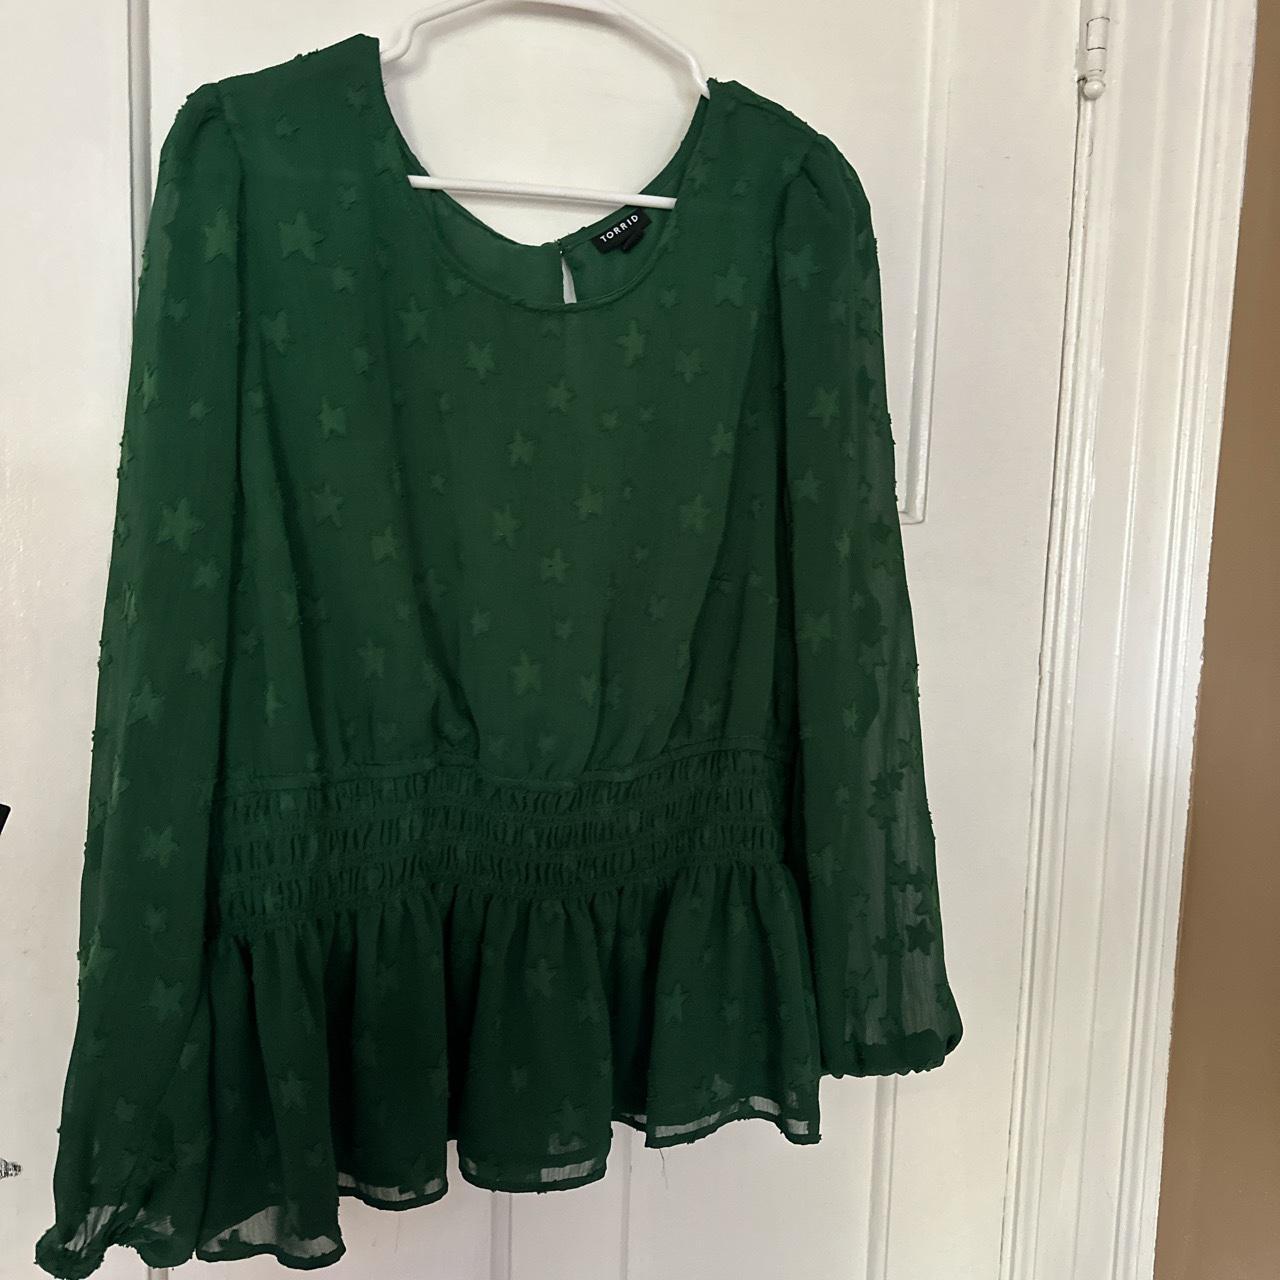 Green size 3, torrid star blouse! - Depop